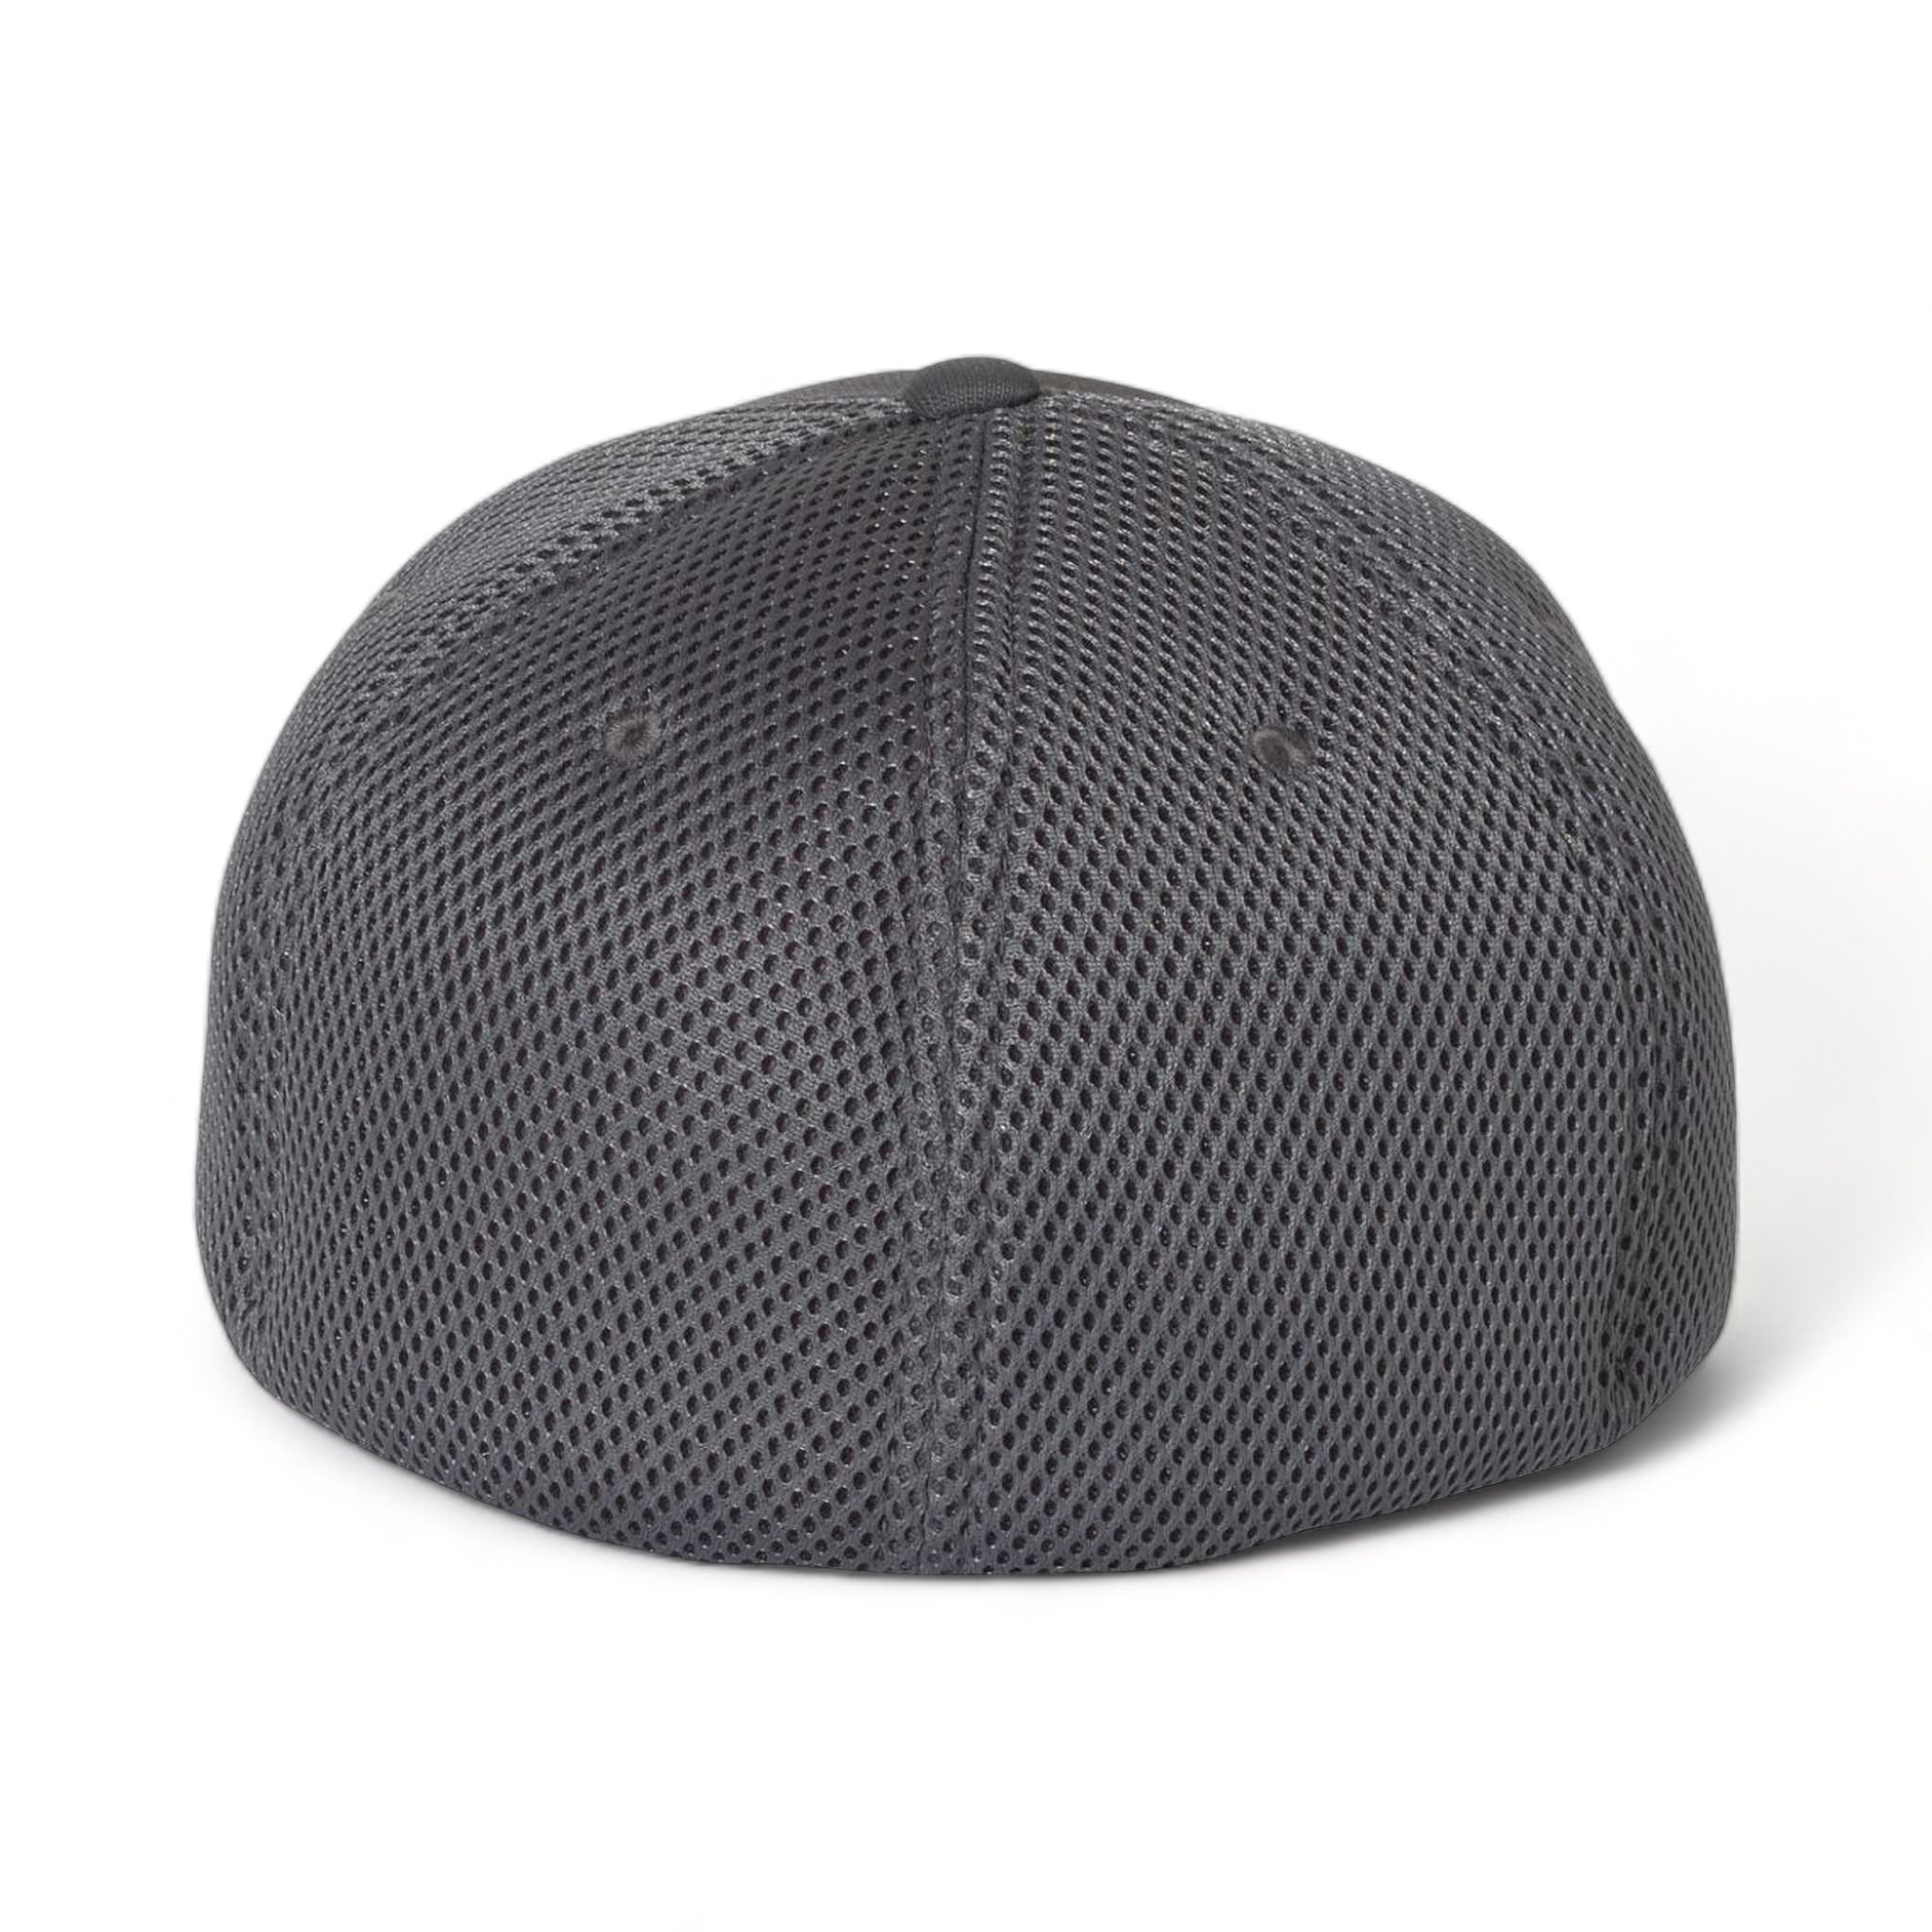 Back view of Flexfit 6533 custom hat in dark grey